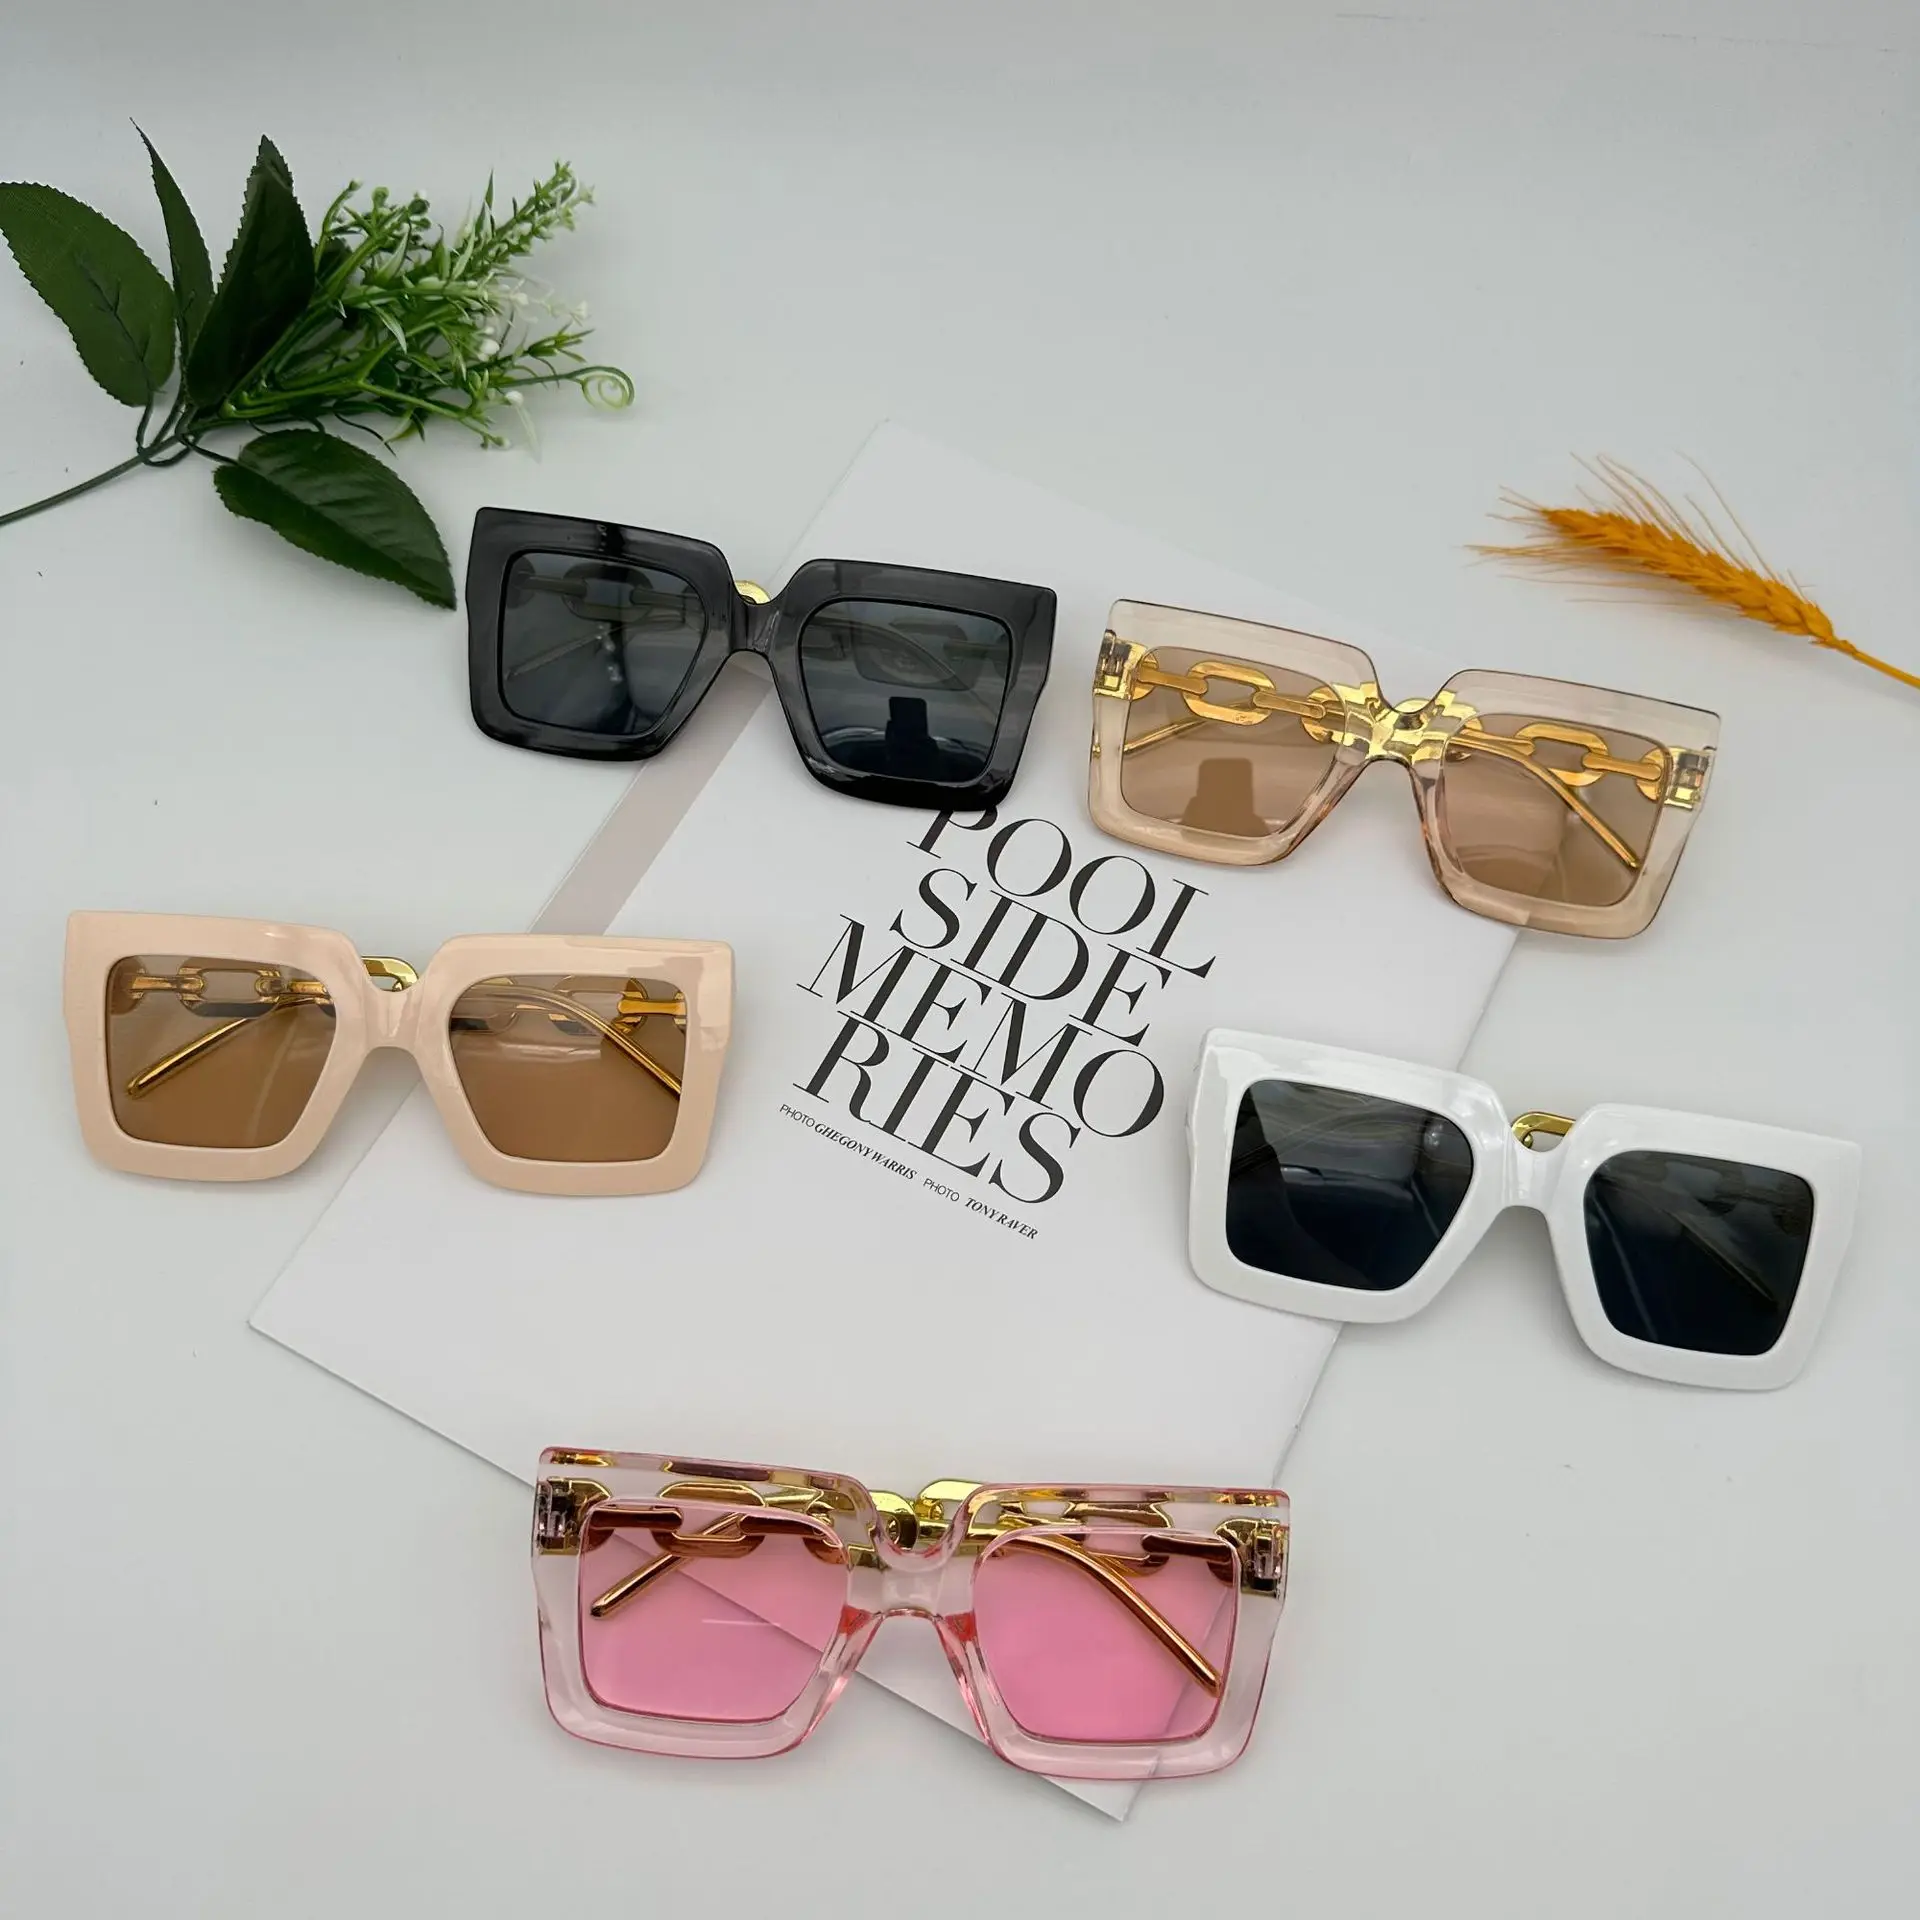 Lot of designer sunglasses - Gem